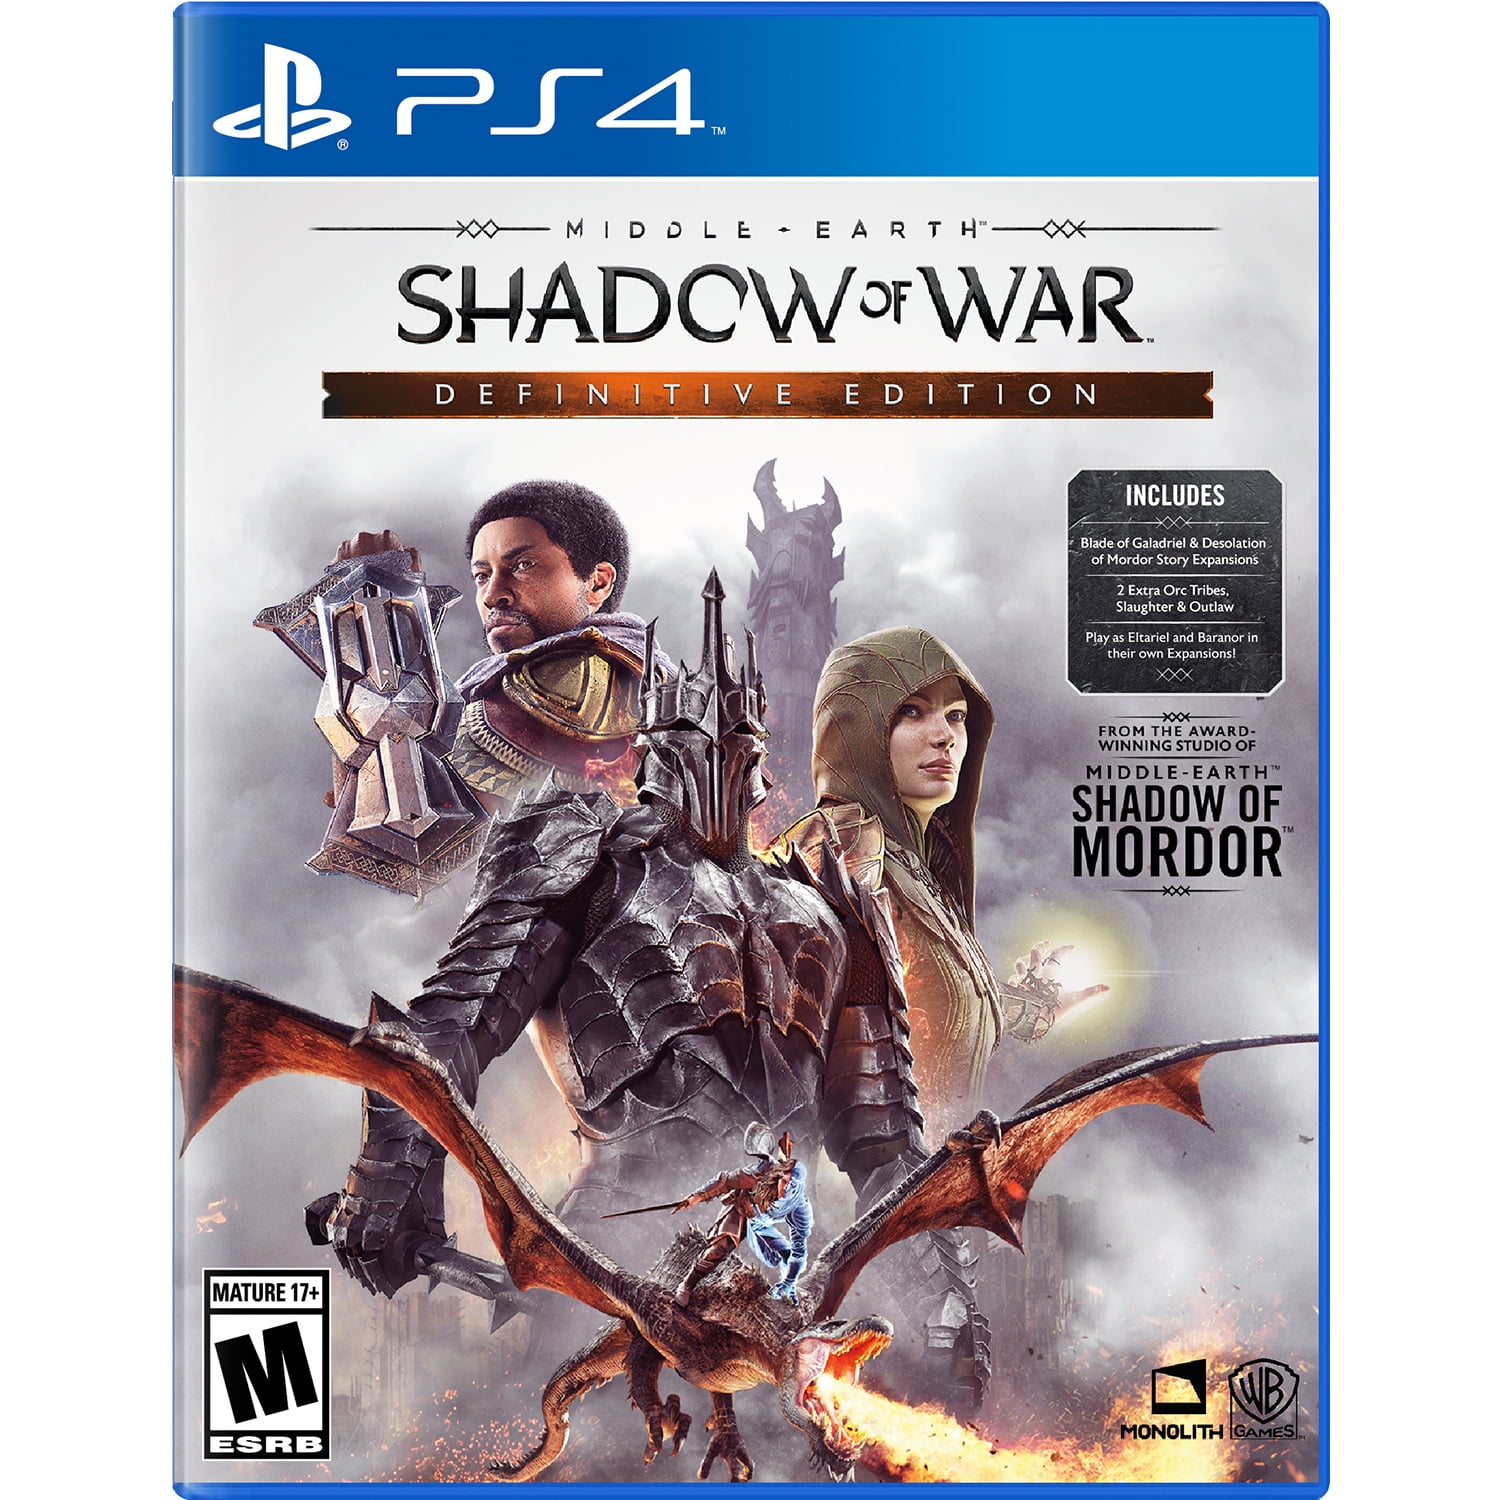 Middle Earth: Shadow of War Definitive Warner PlayStation 4, 883929654291 - Walmart.com